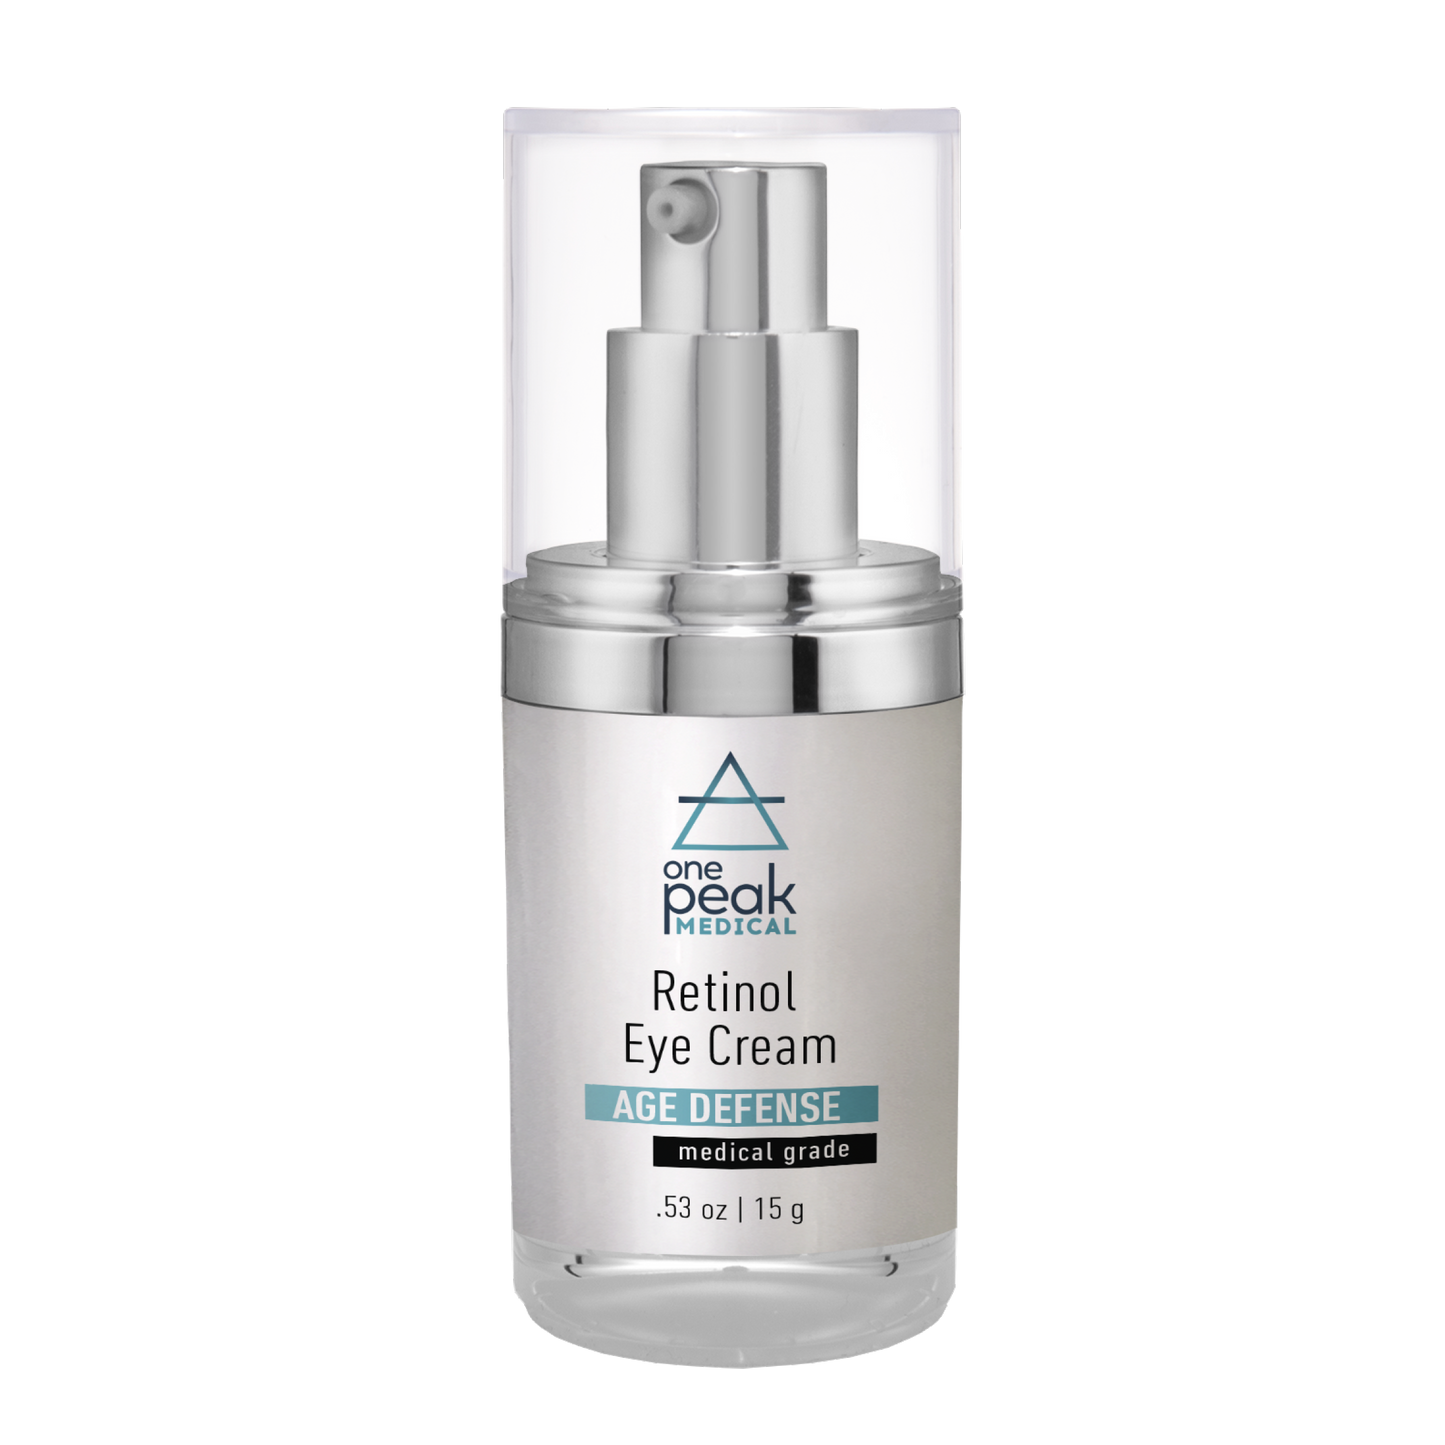 OnePeak Medical - retinol eye cream in short grey bottle